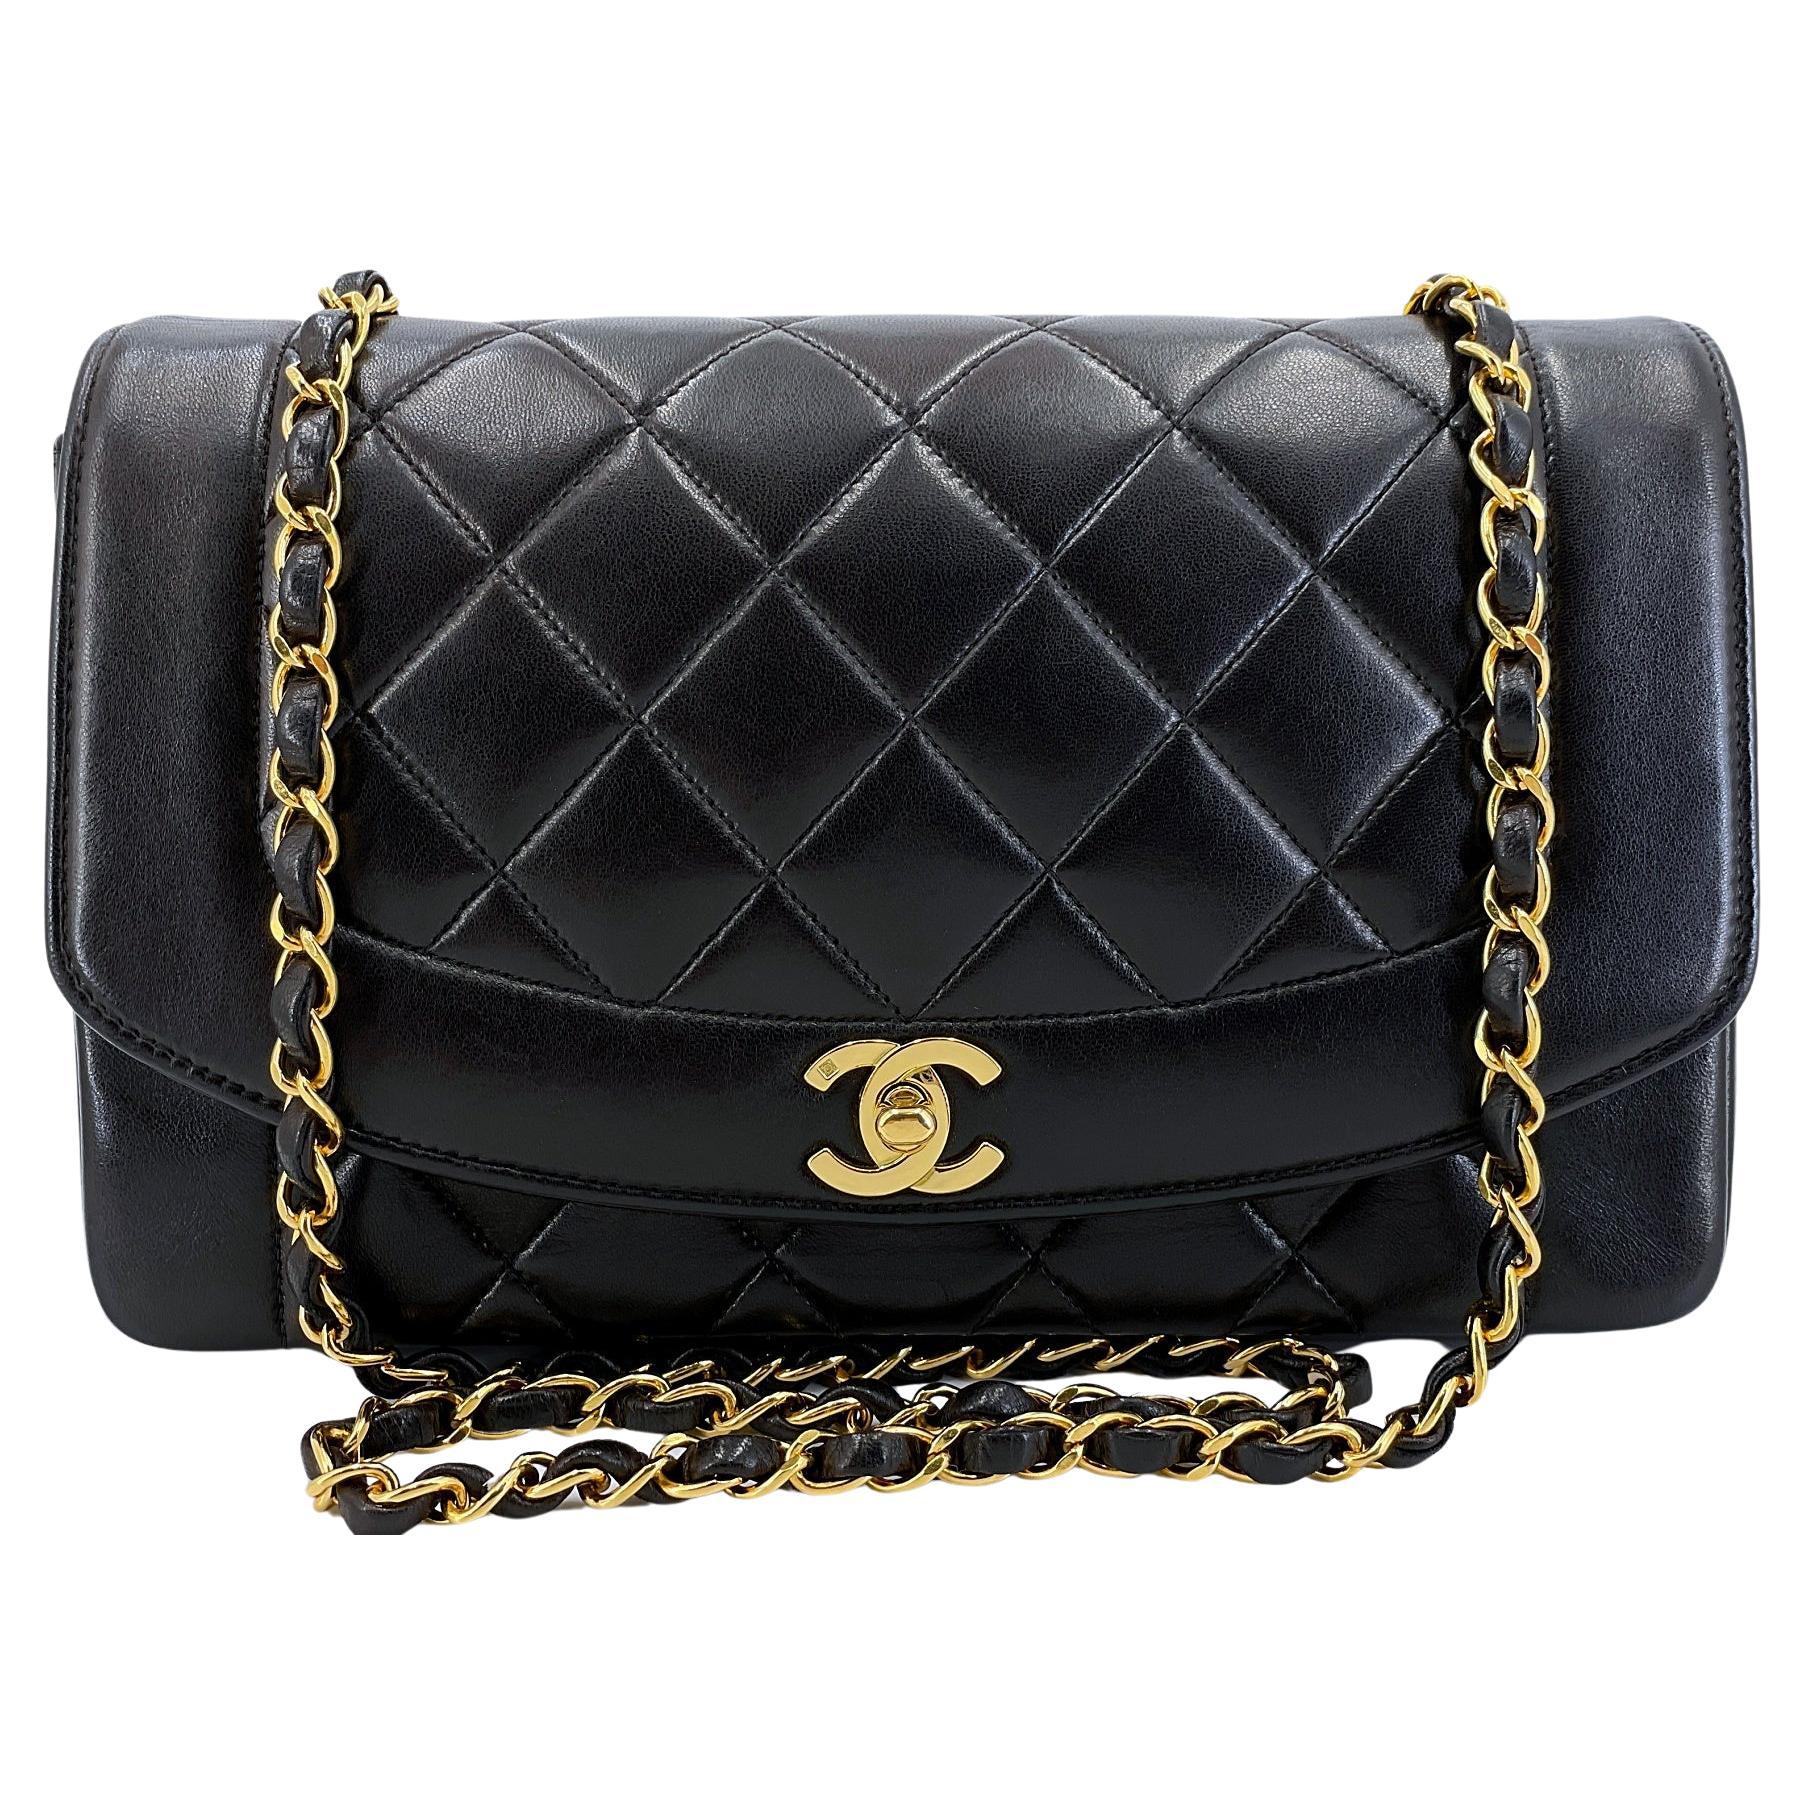 Did Chanel invent the shoulder bag?